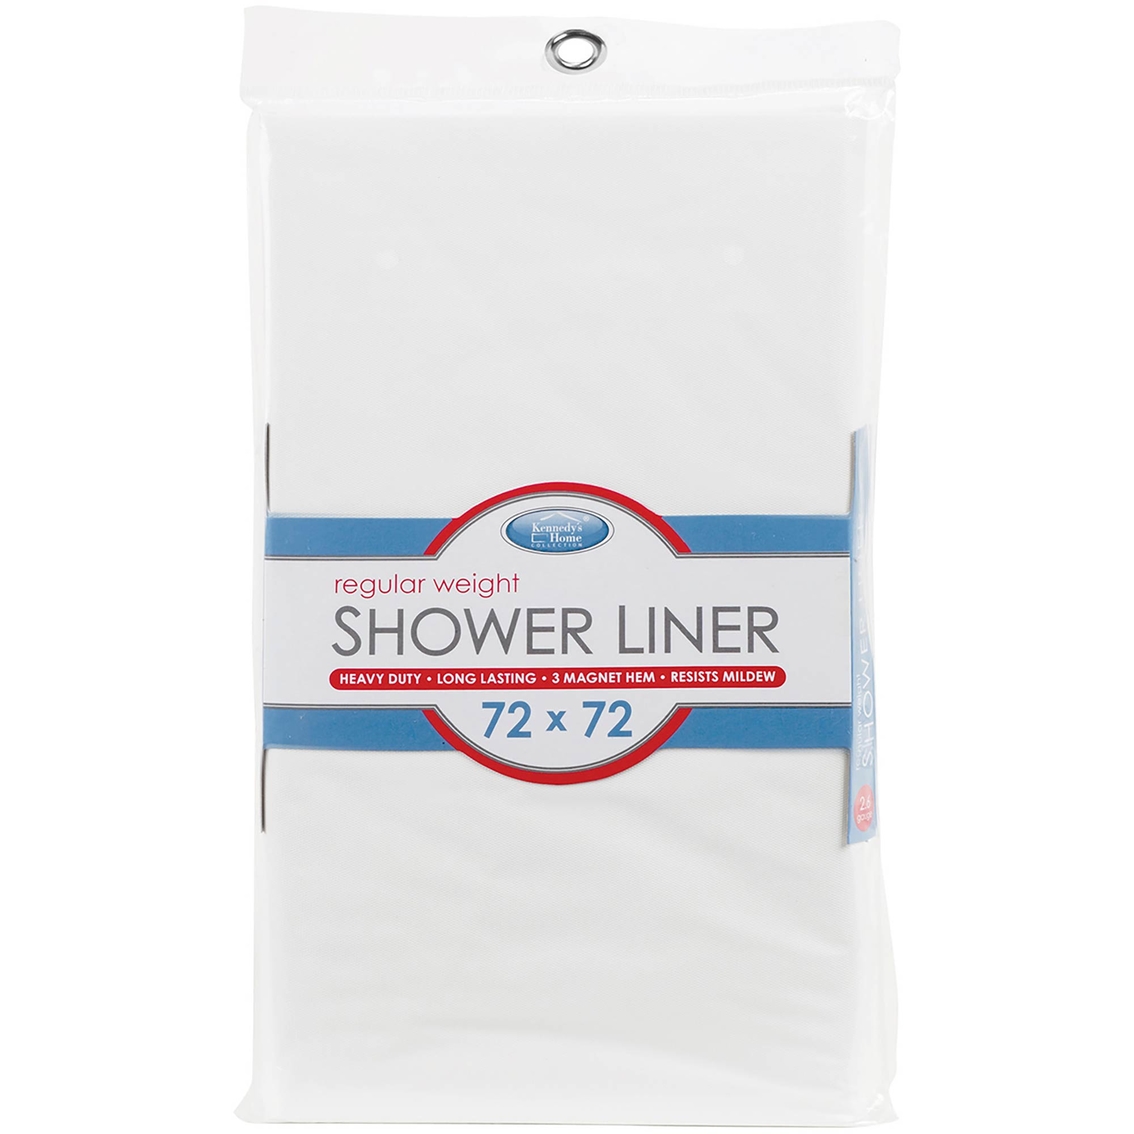 Bath Bliss Shower Liner - Image 2 of 2